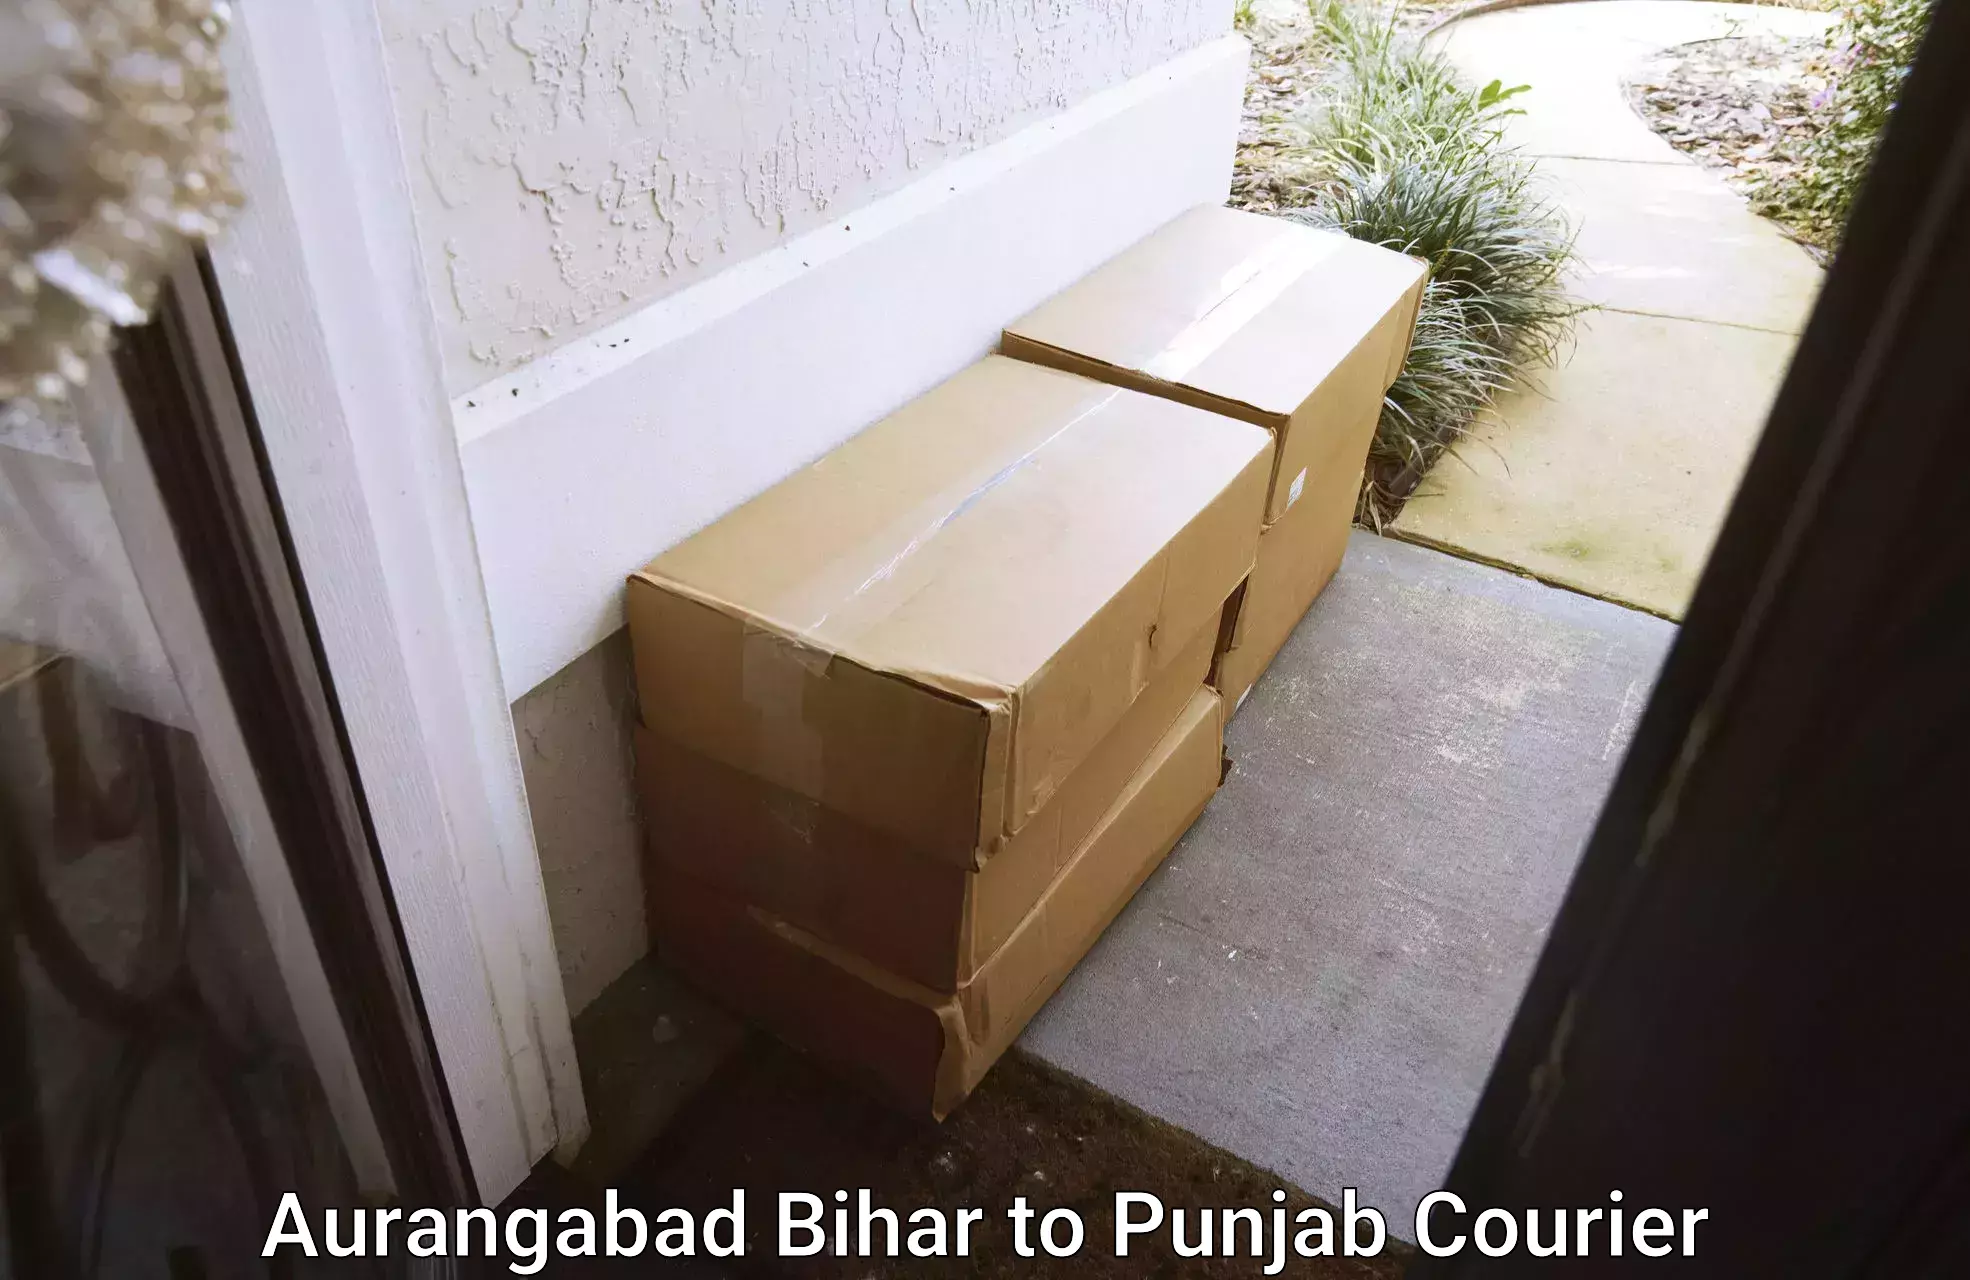 Full-service relocation in Aurangabad Bihar to Punjab